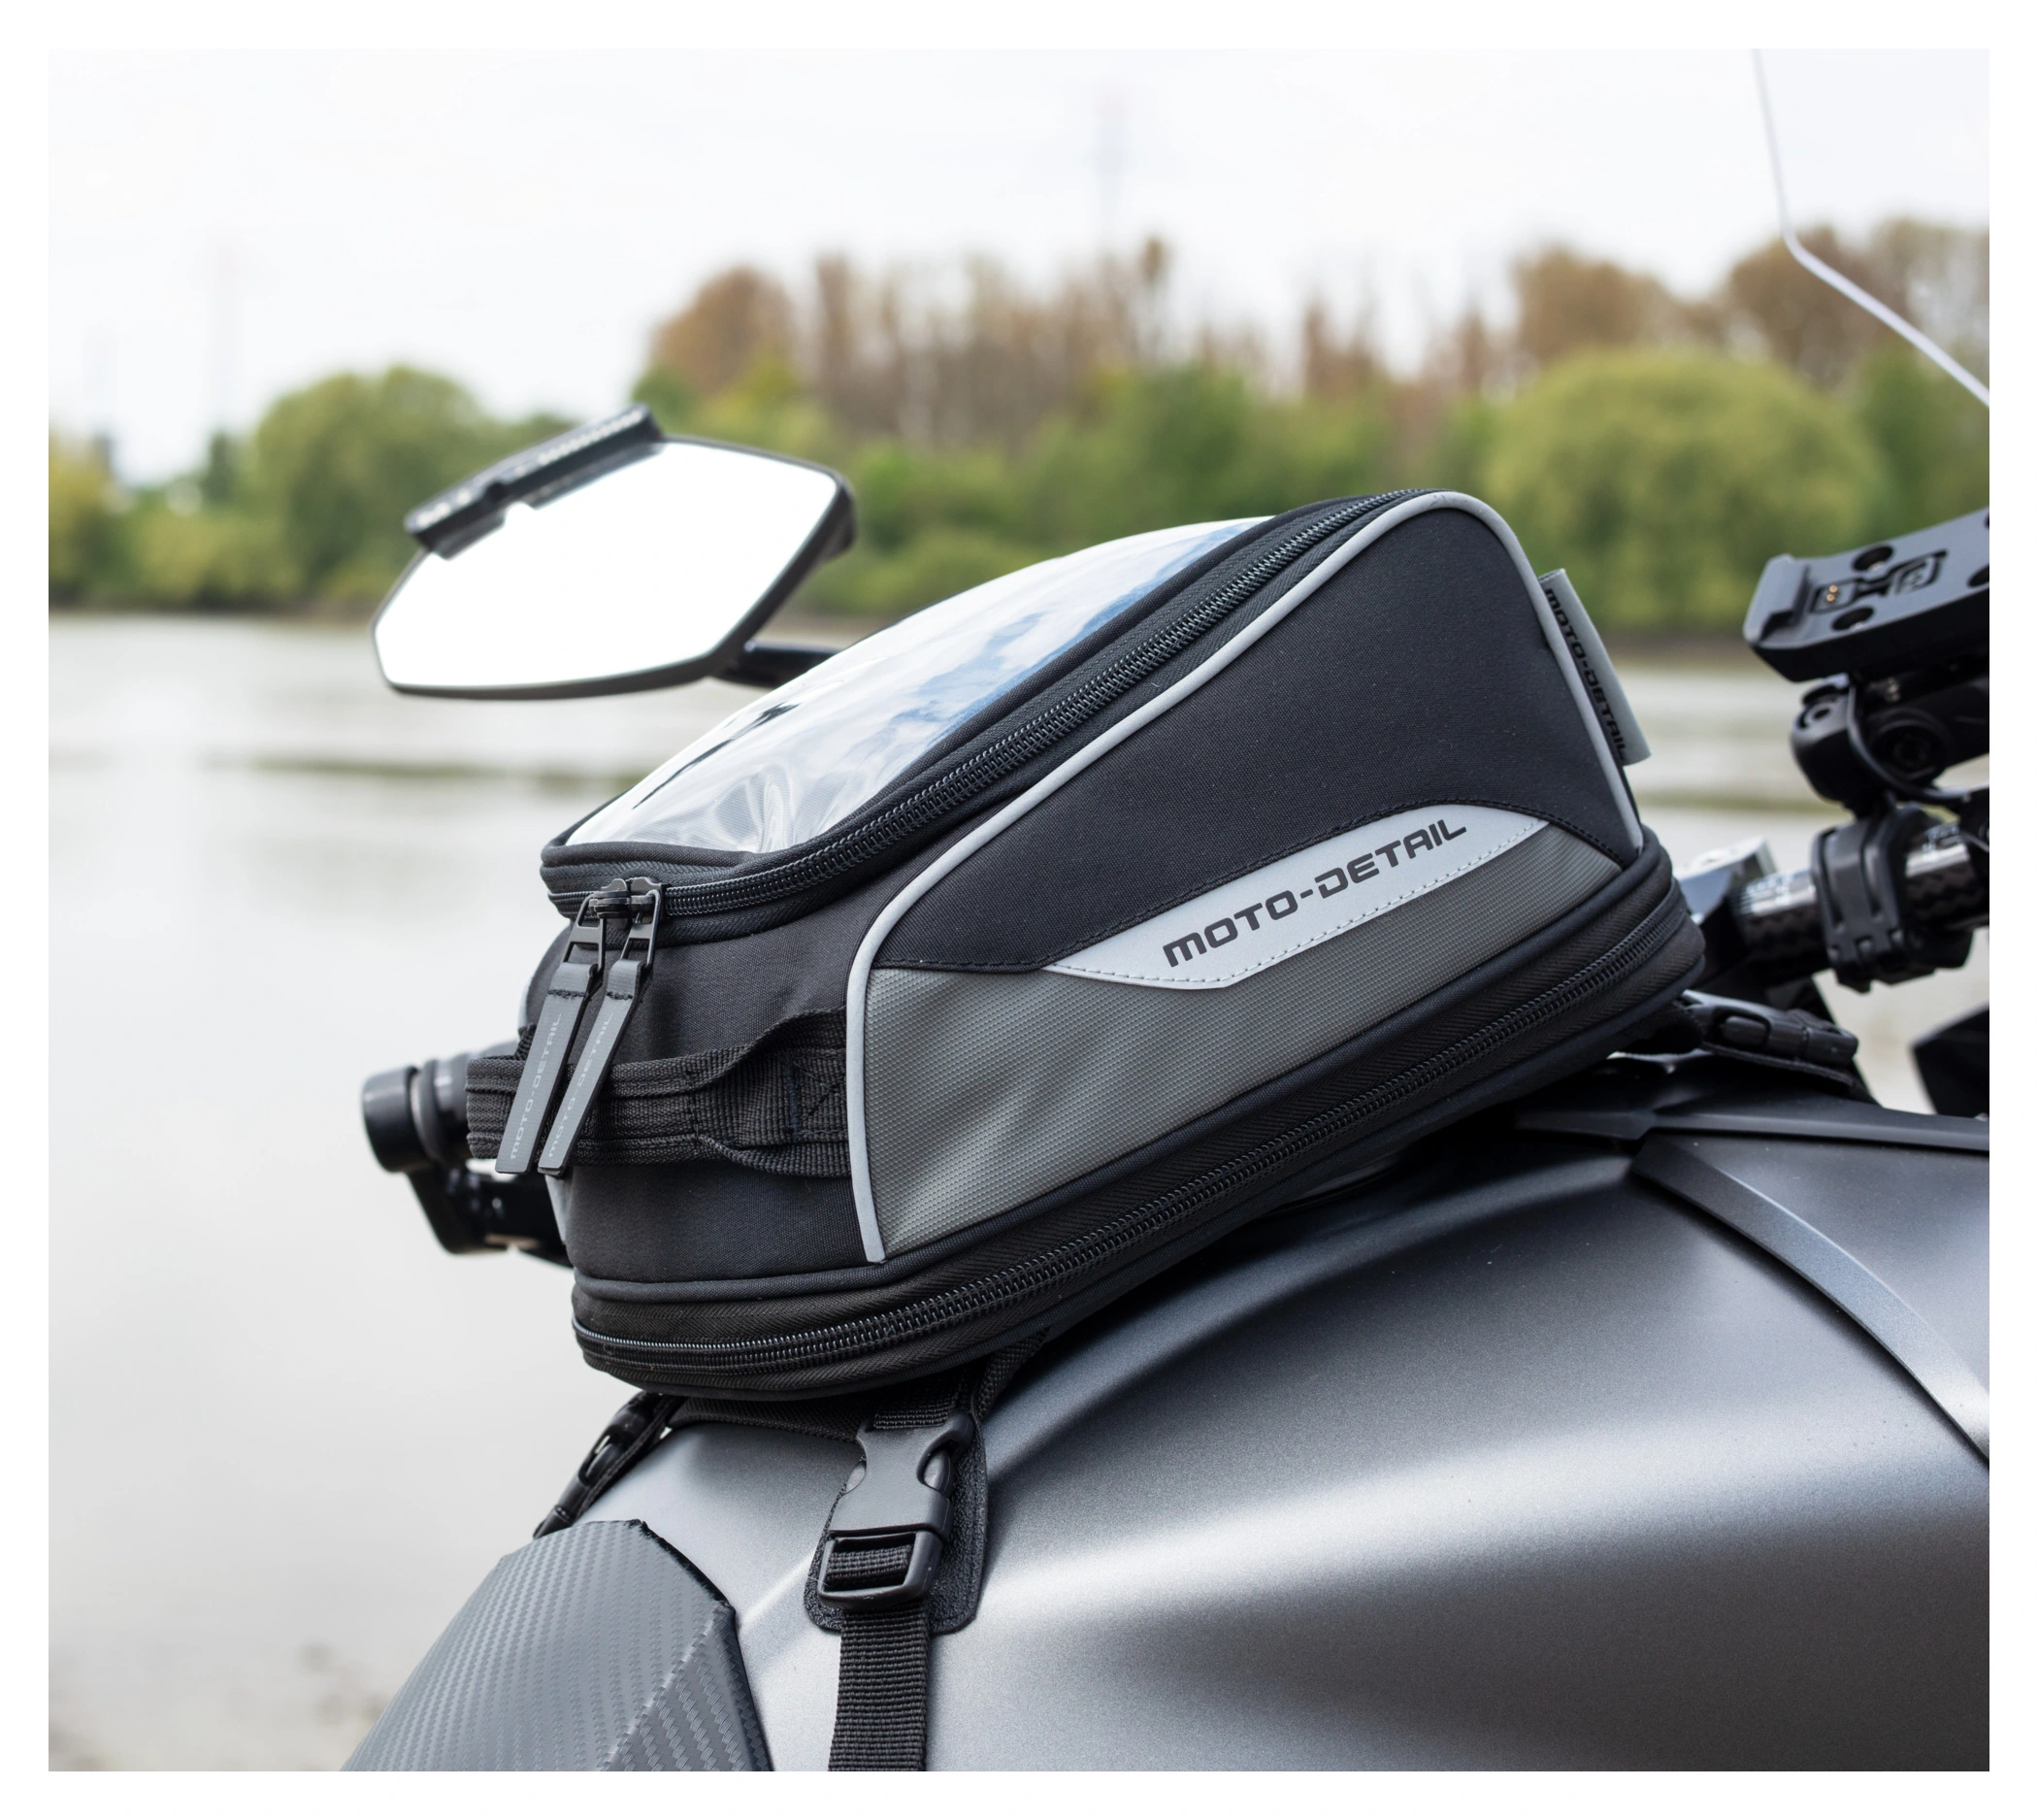 accessoires moto: intercom, protege-reservoir